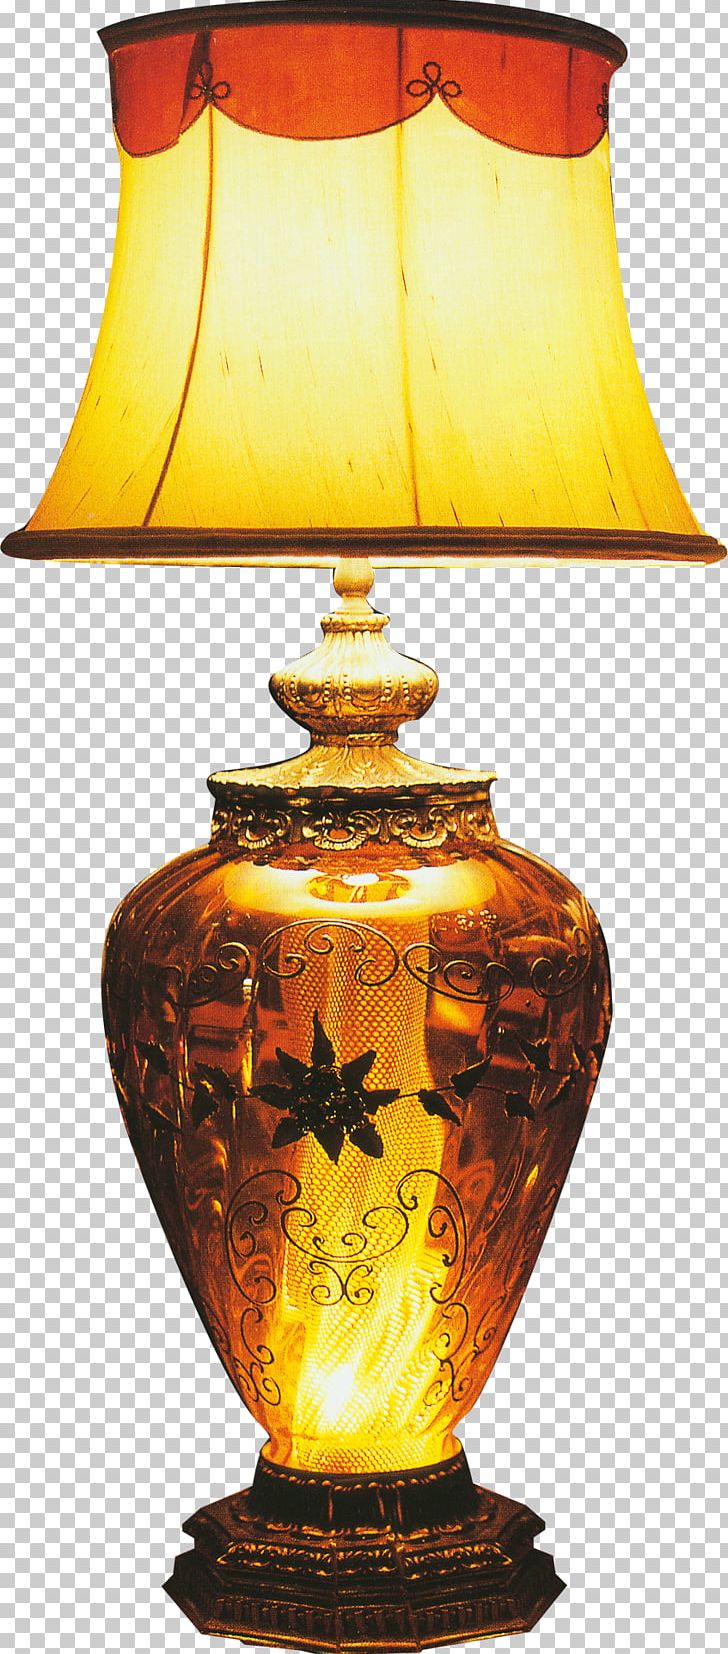 Vase Furniture Luxury Lamp PNG, Clipart, Artifact, Ceramic, Creative, Creative Plane Lamp, Decorative Arts Free PNG Download